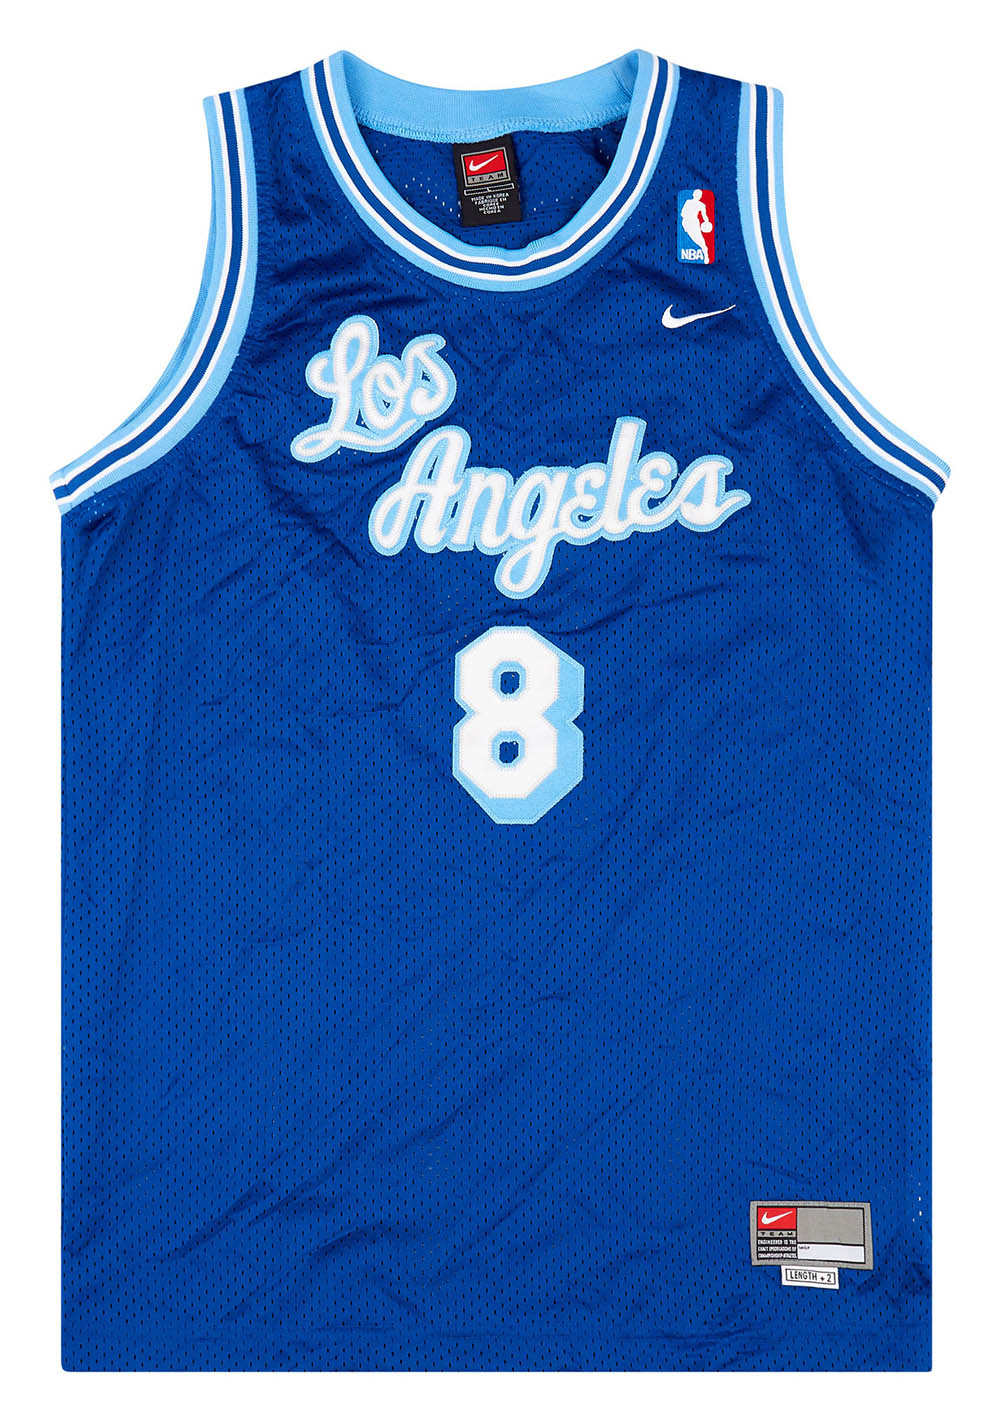 Los Angeles Lakers Vintage Jerseys, Lakers Retro Jersey